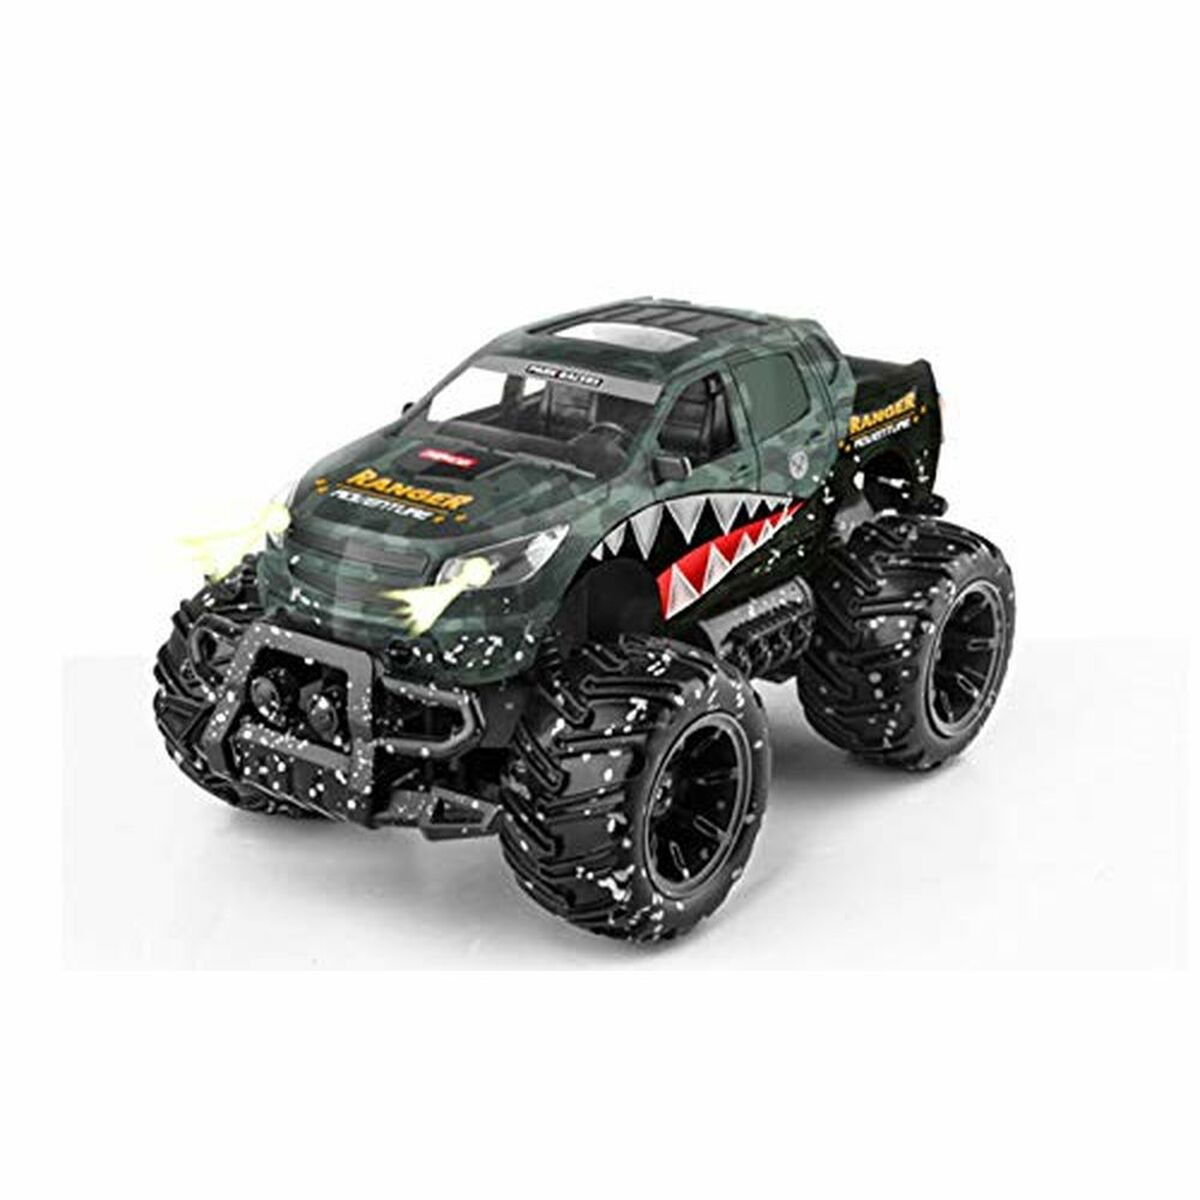 Mașină Radio Control Ninco Ranger Monster 30 x 19 x 16 cm